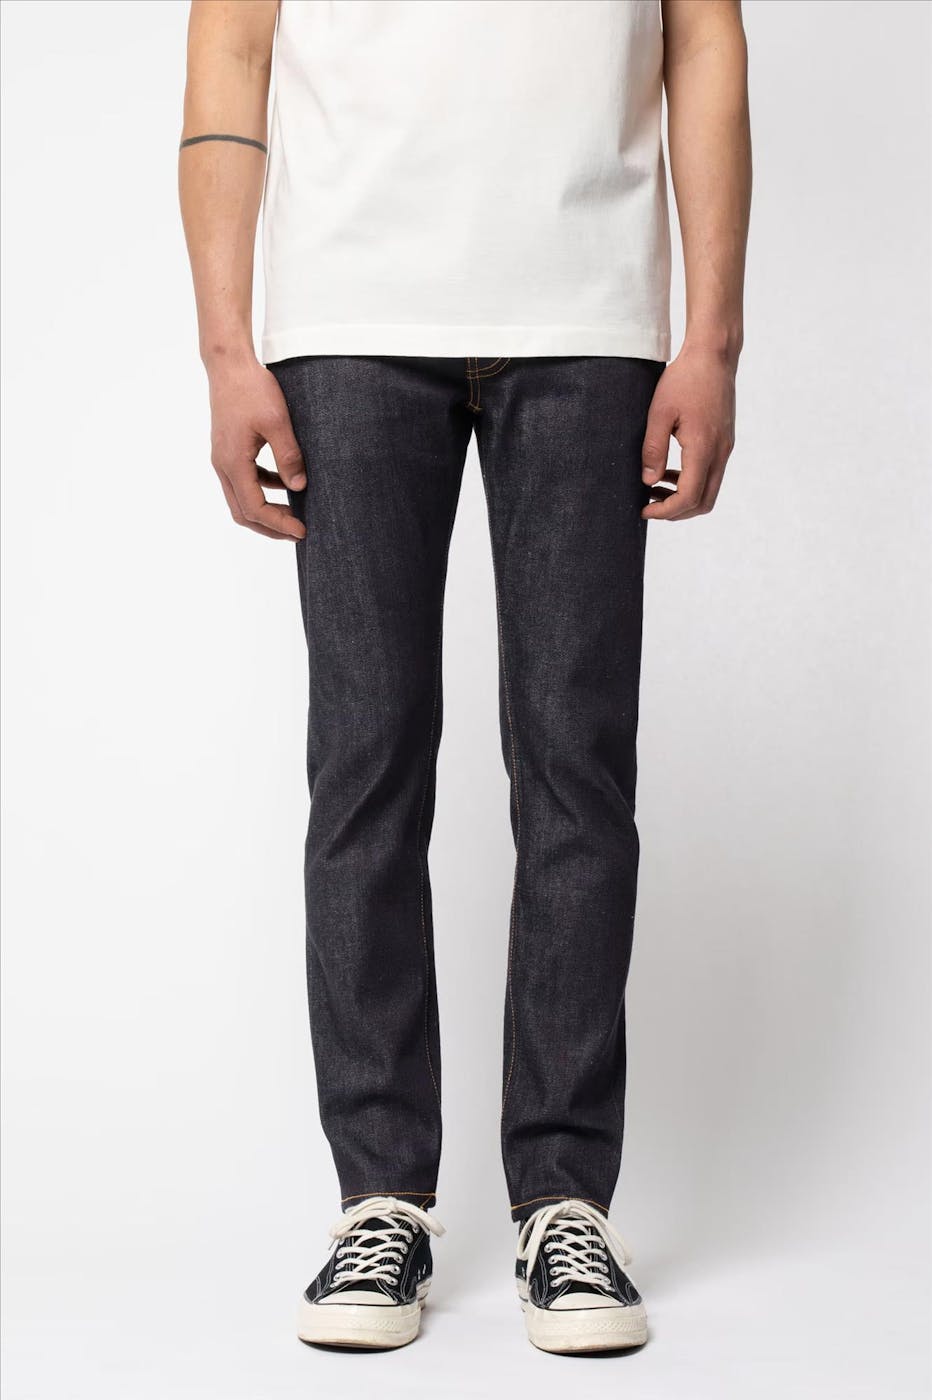 Nudie Jeans Co. - Donkerblauw-grijze Lean Dean slim tapered jeans